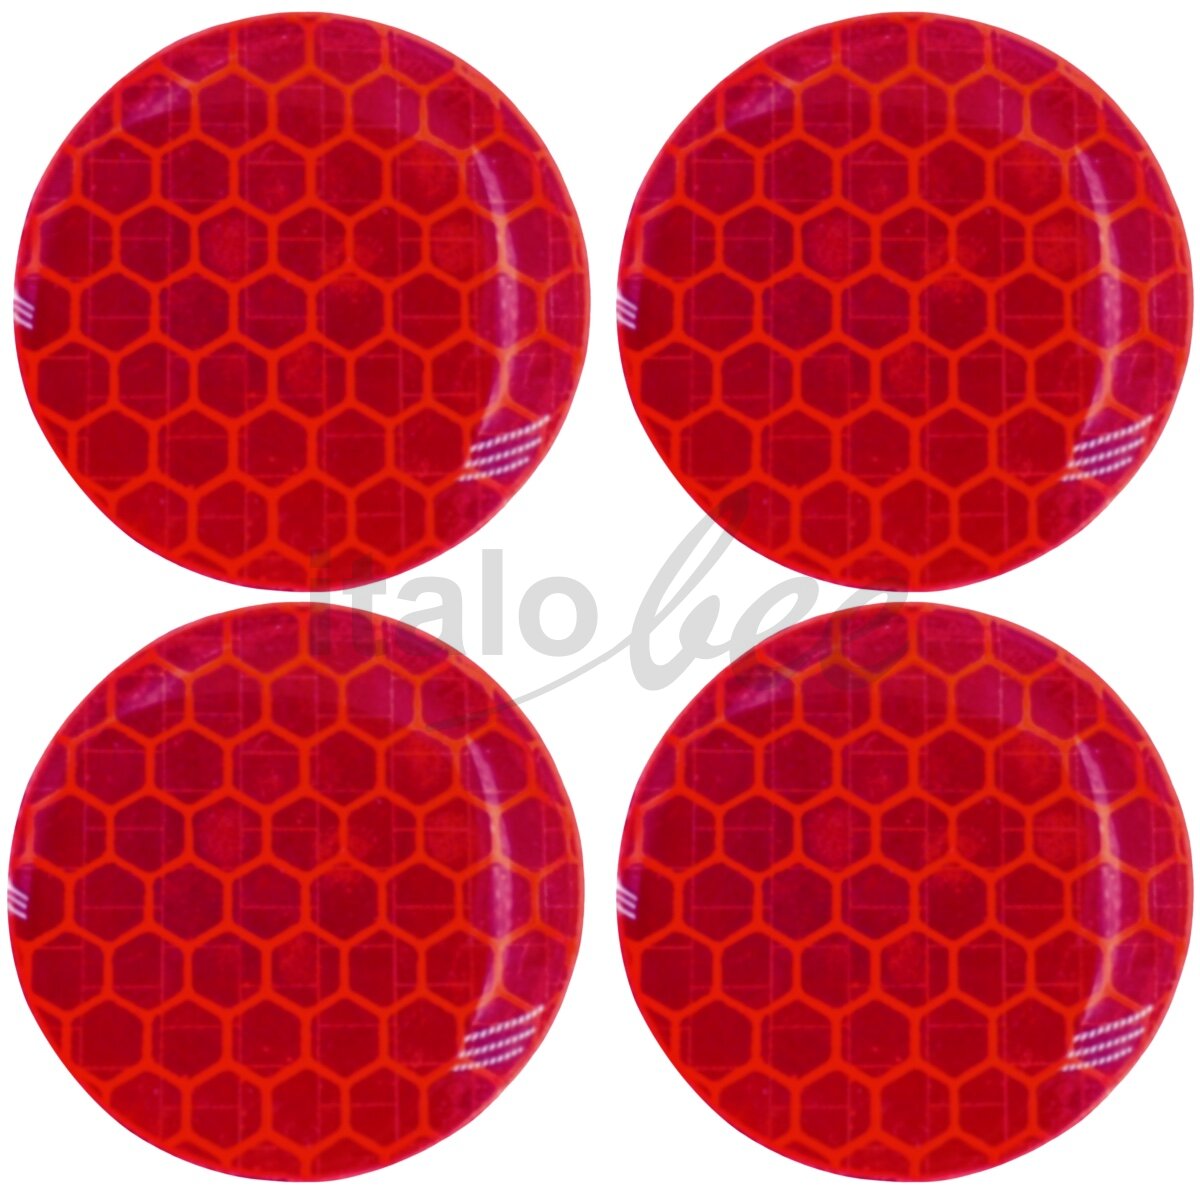 https://www.italobee.de/media/image/product/8099/lg/reflektoren-set-4-teilig-selbstklebend-farbe-rot.jpg